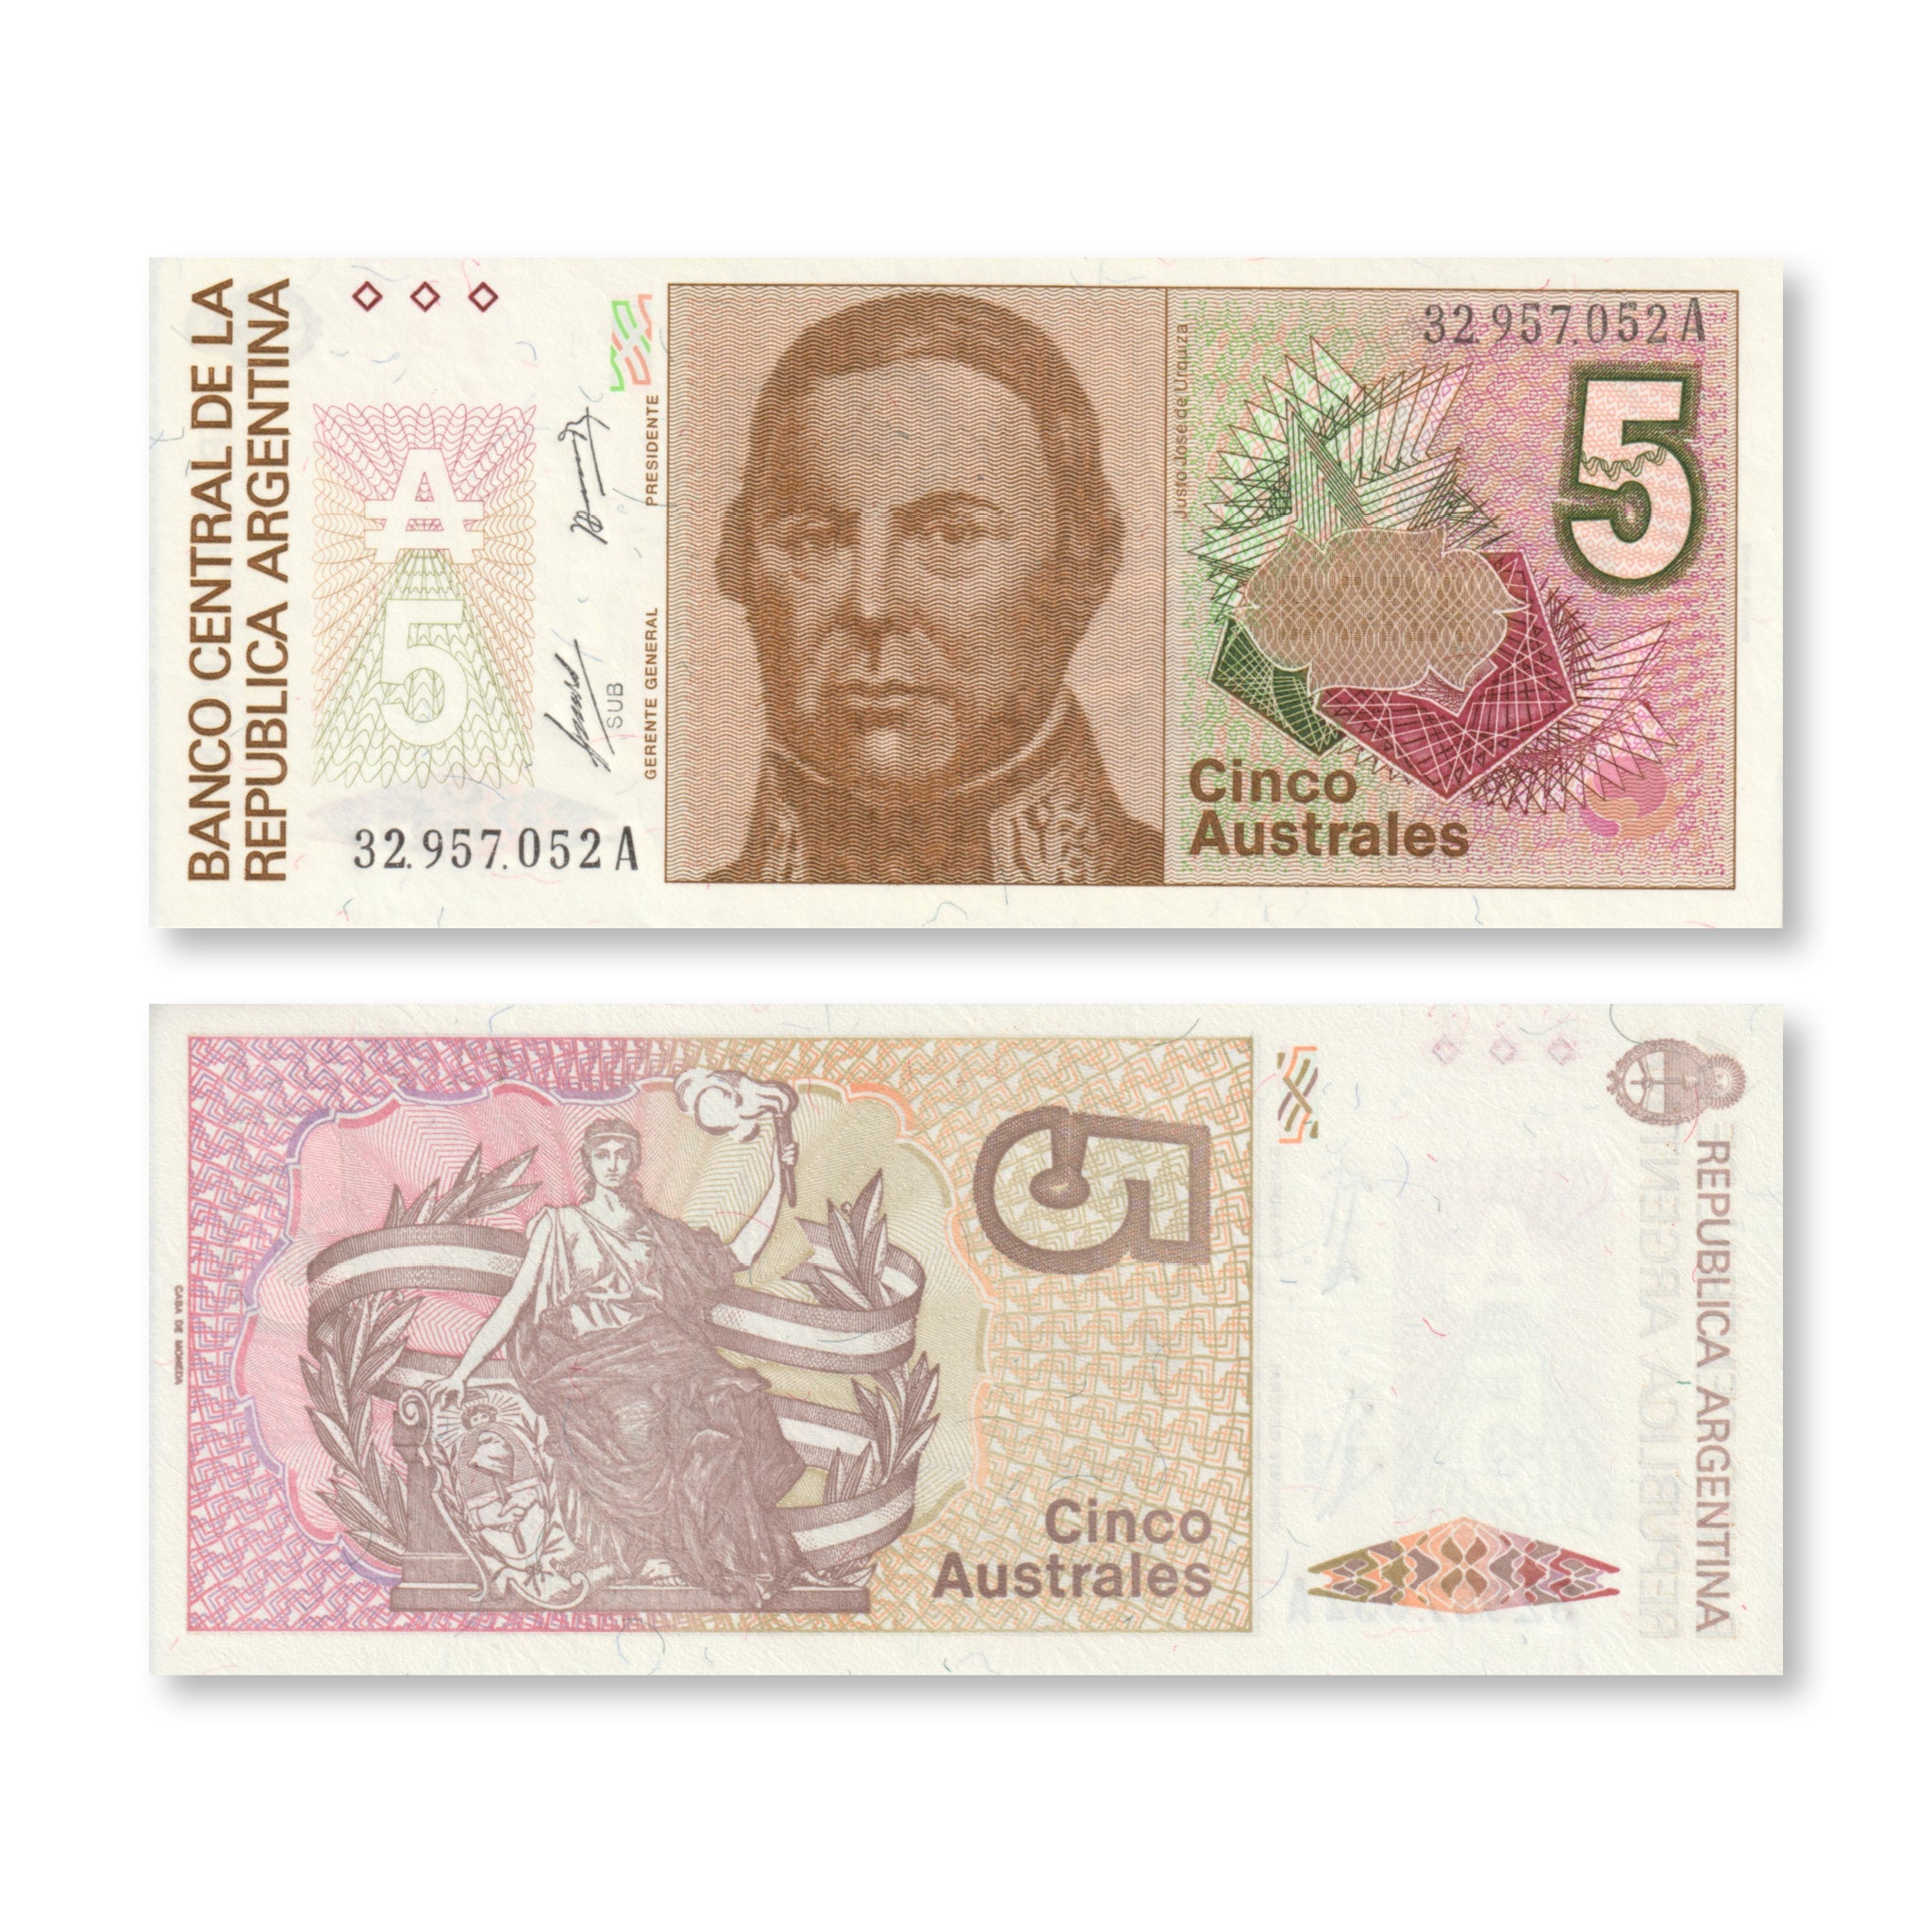 Argentina 5 Australes, 1986, B377a, P324b, UNC - Robert's World Money - World Banknotes